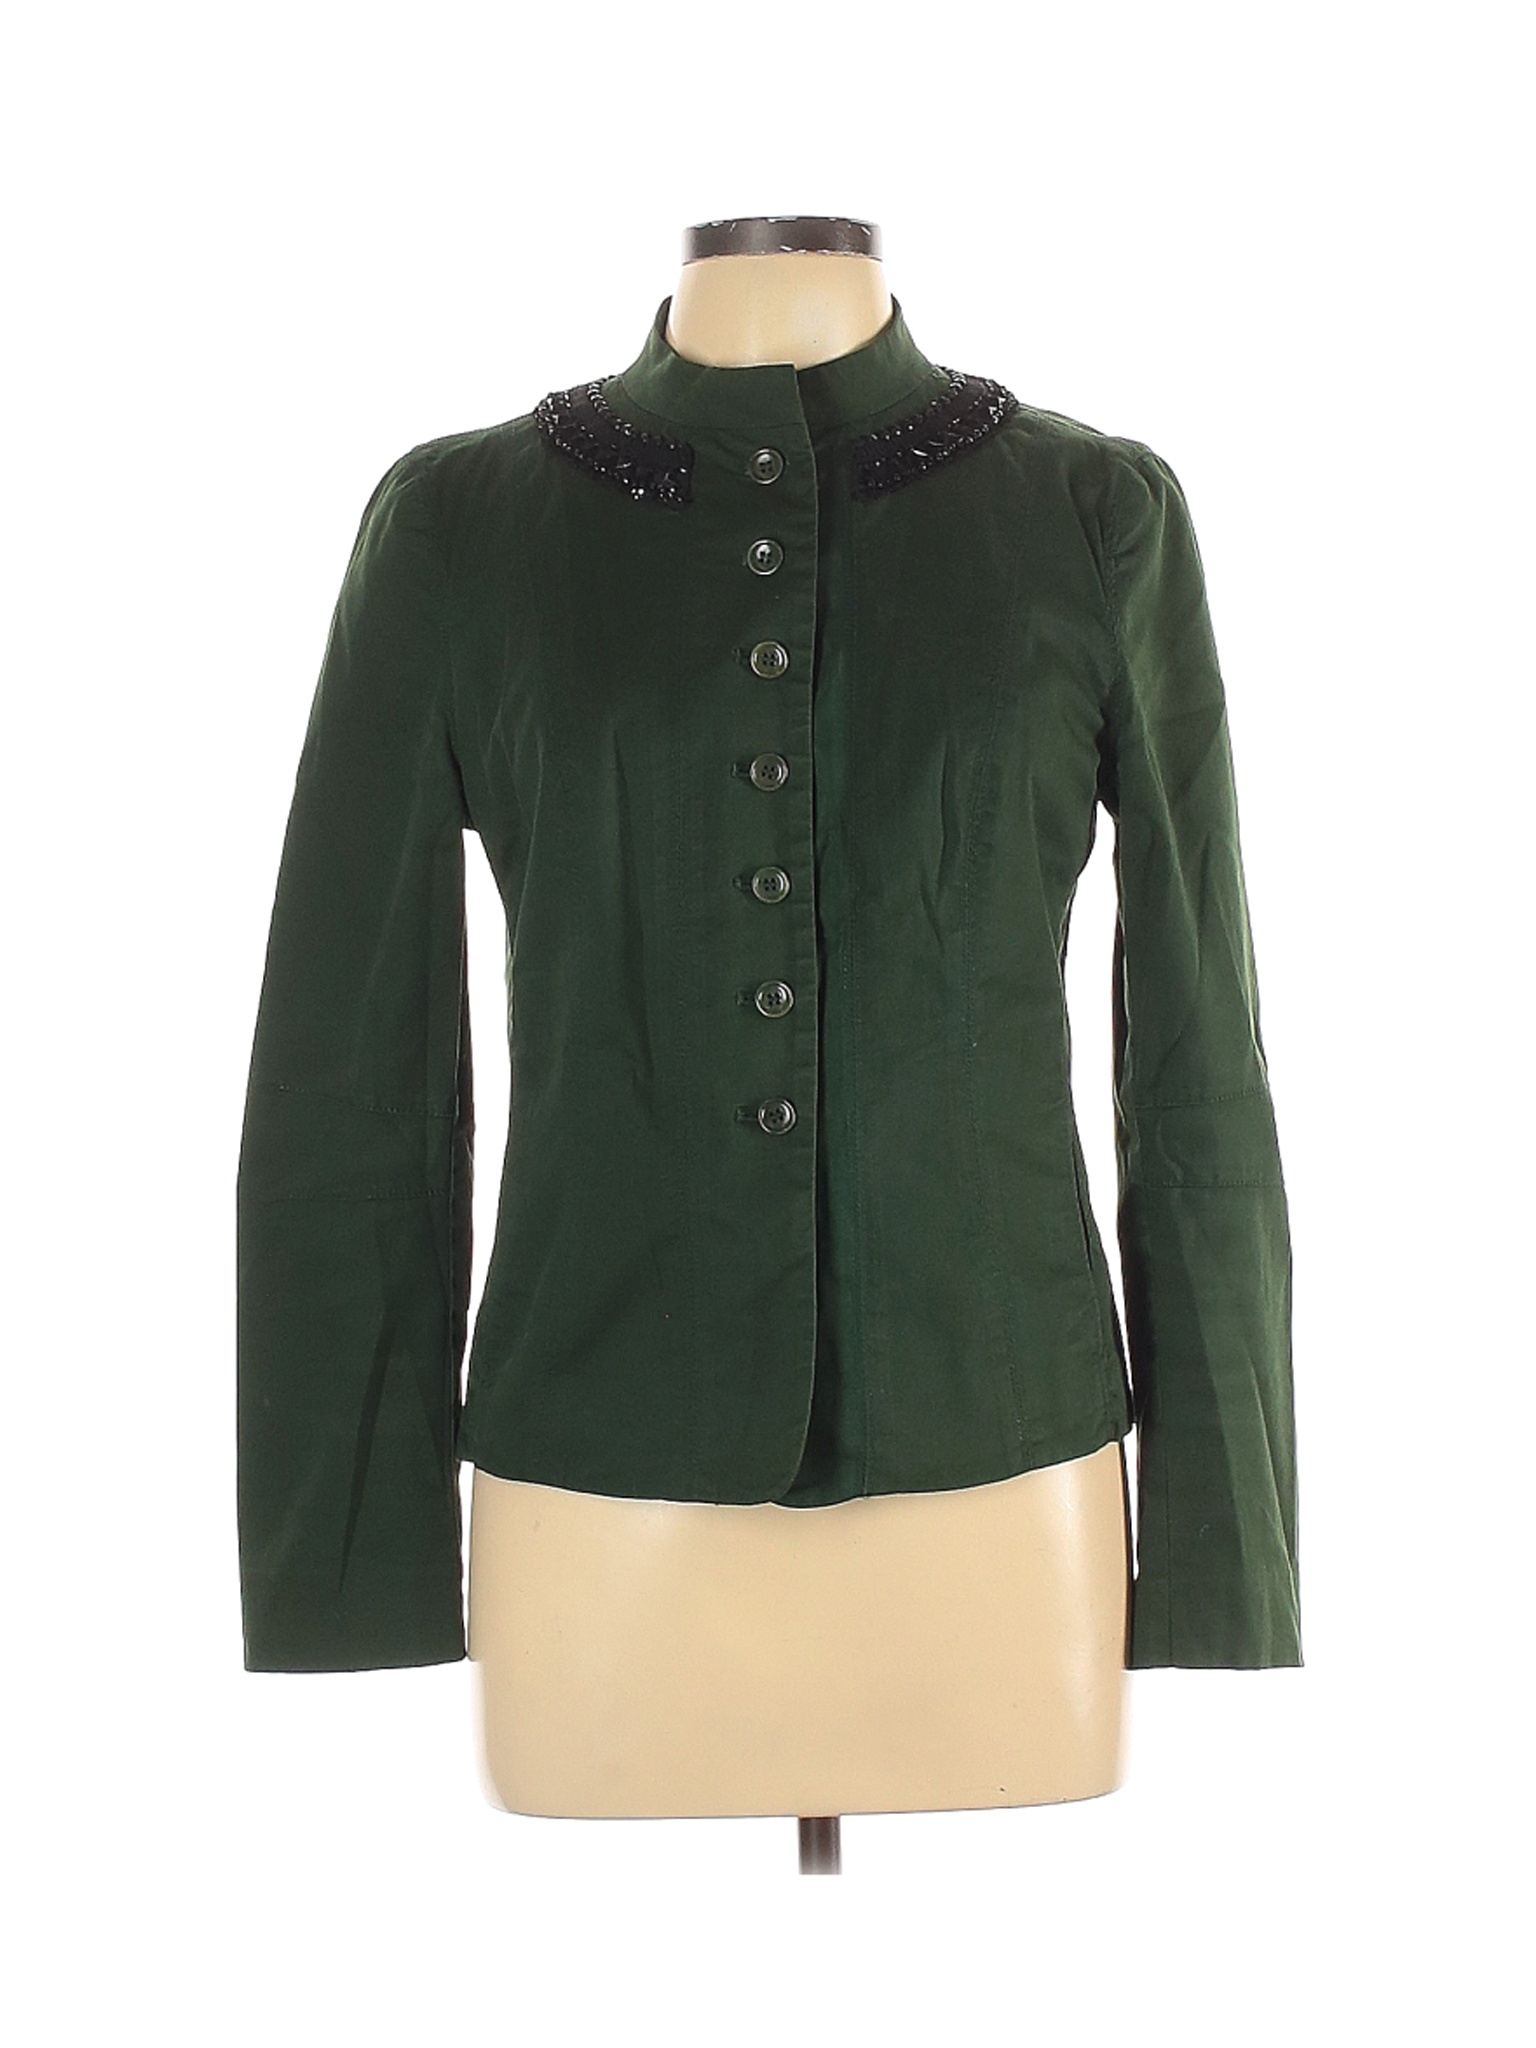 DKNY Women Green Jacket 10 | eBay